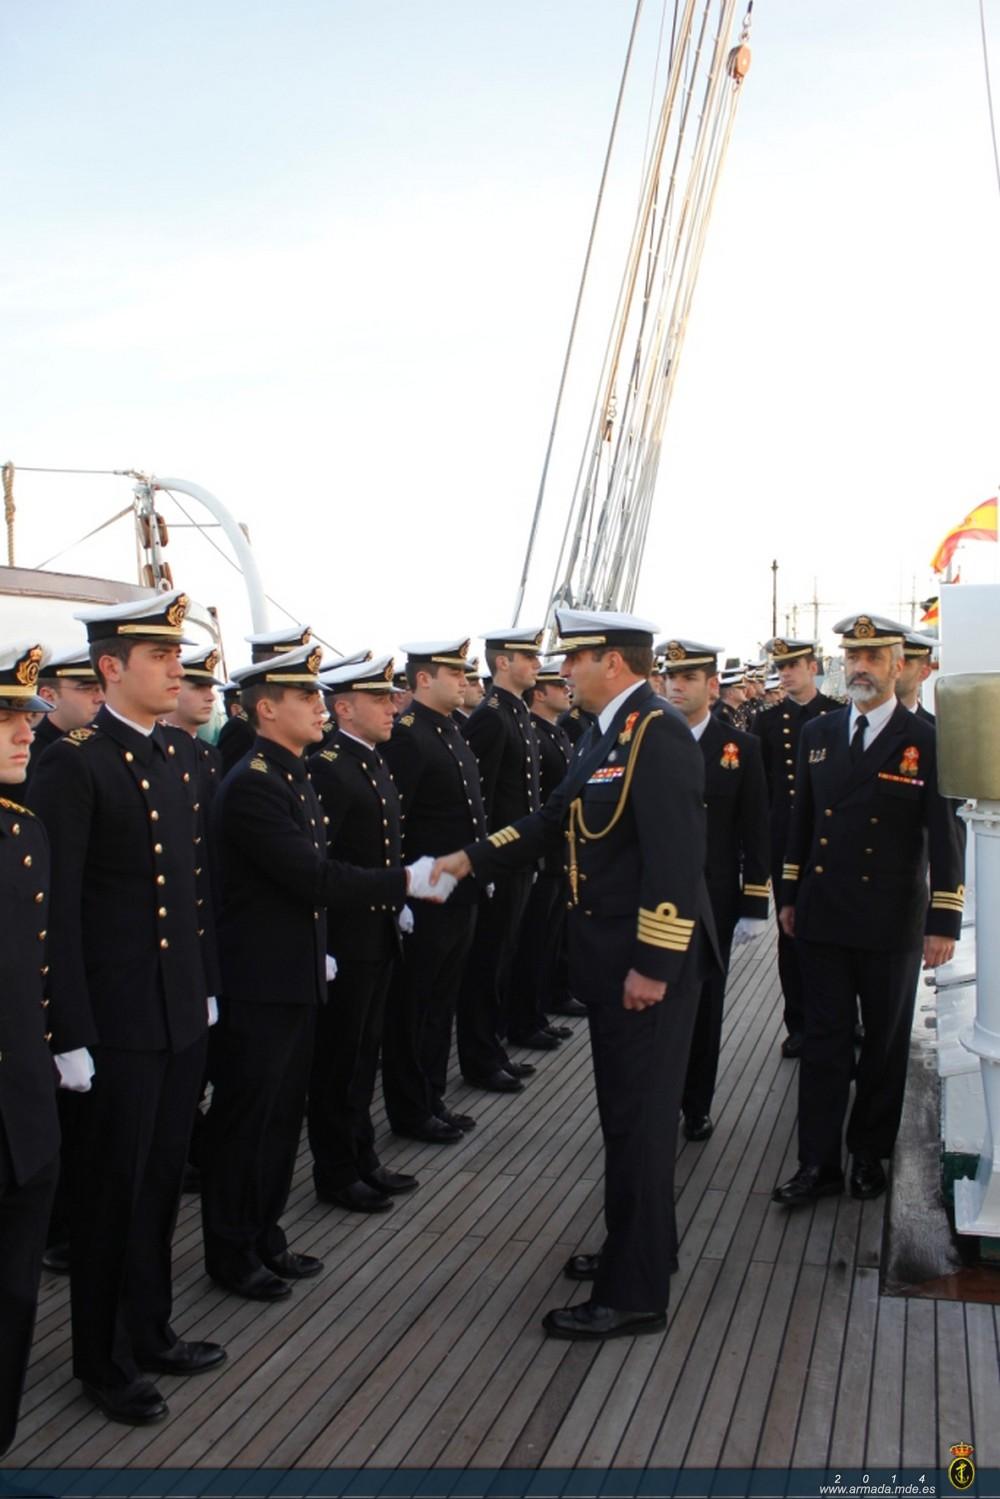 The Commanding Officer welcomes the midshipmen